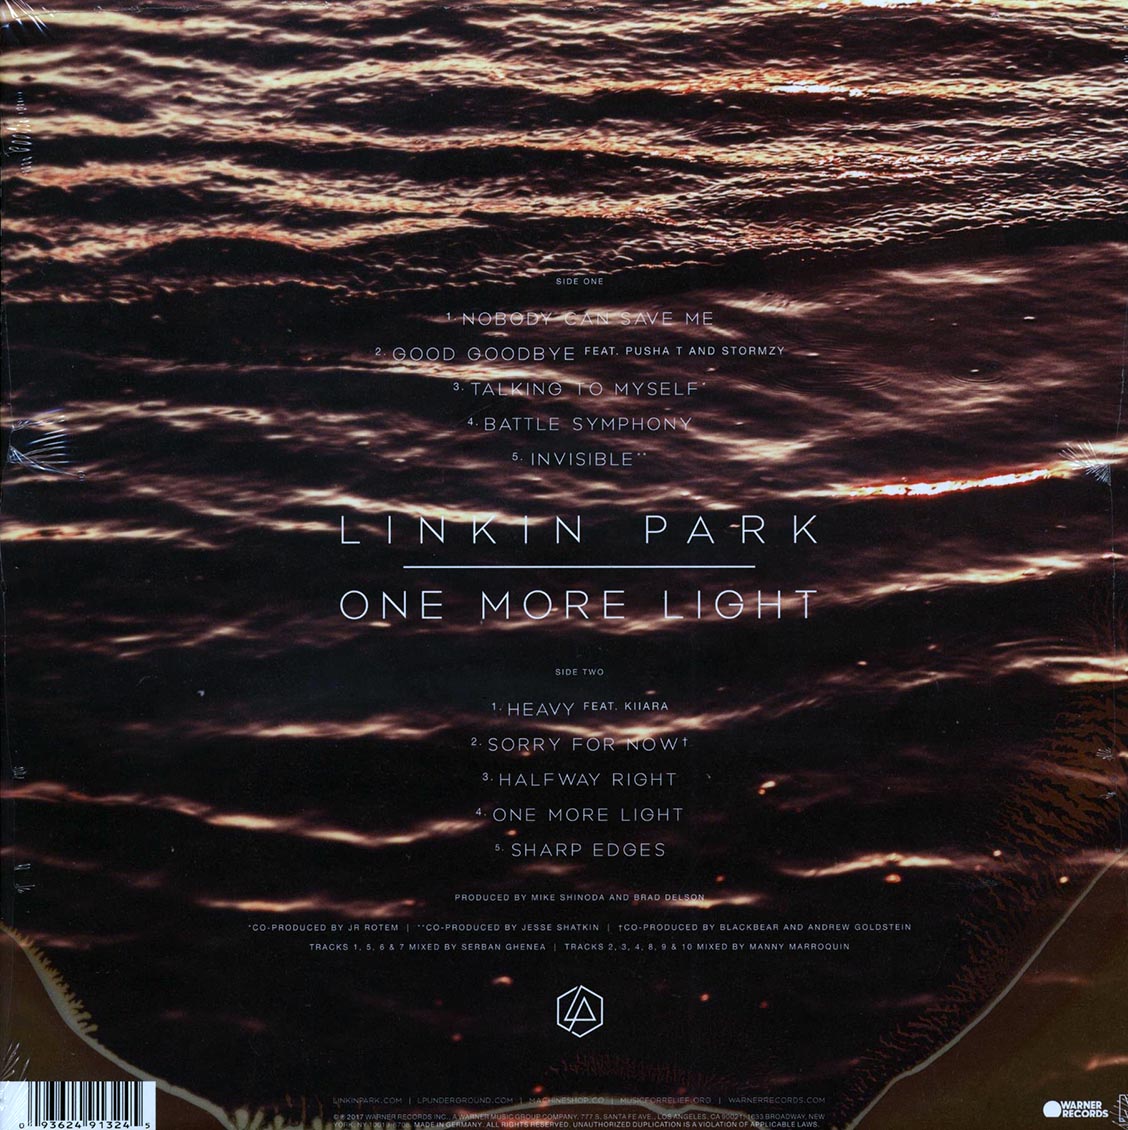 Linkin Park - One More Light [2020 Reissue] [New Vinyl Record LP]